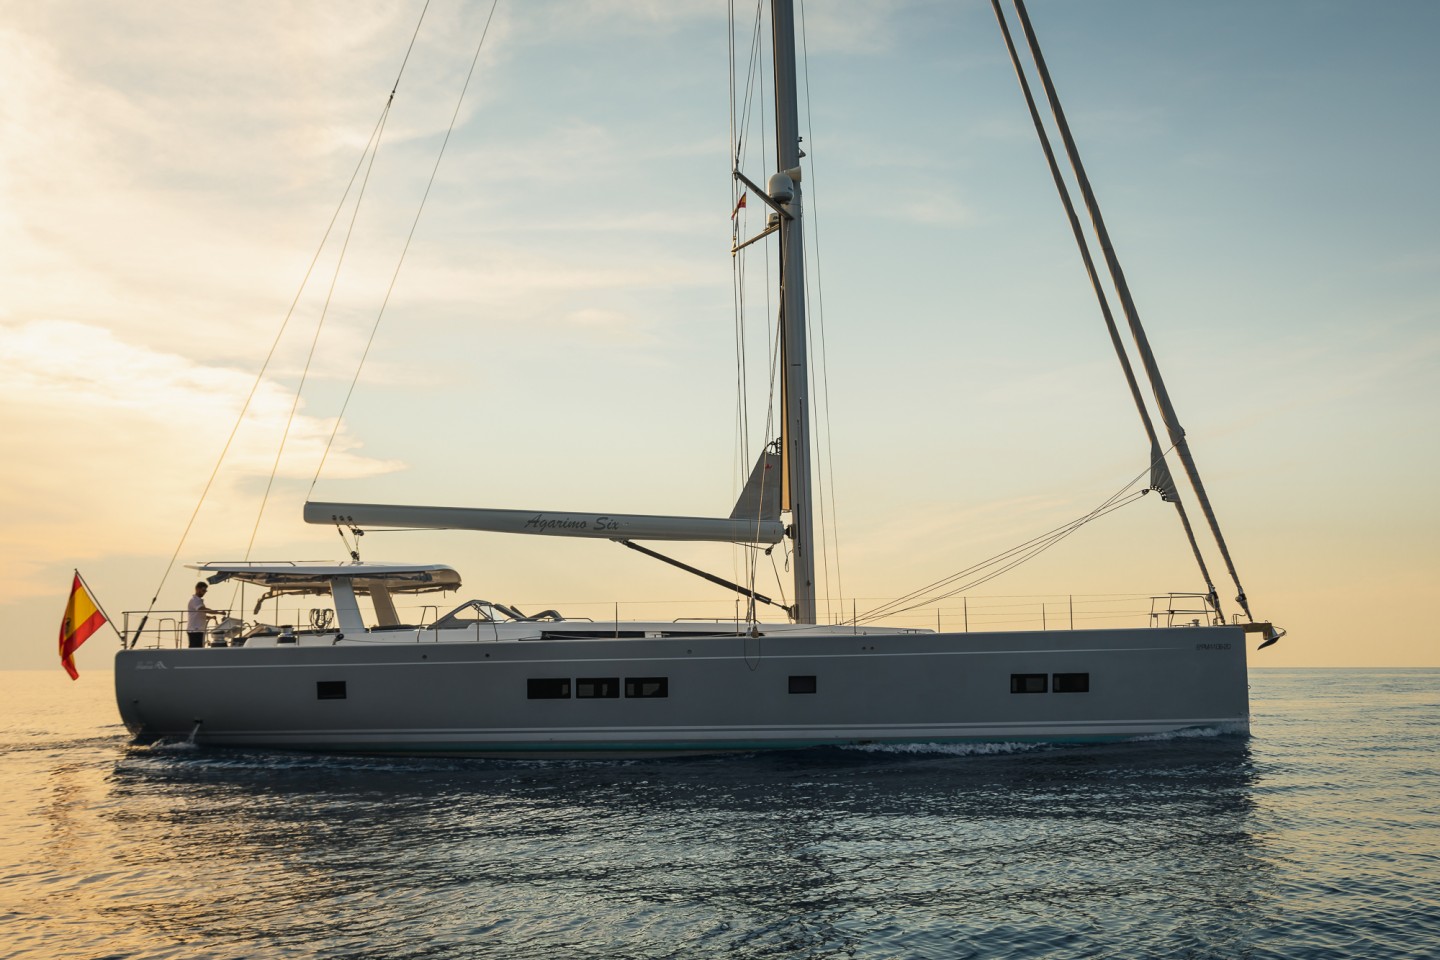 Sail boat FOR CHARTER, year 2018 brand Hanse and model 675, available in Puerto de Soller Sóller Mallorca España